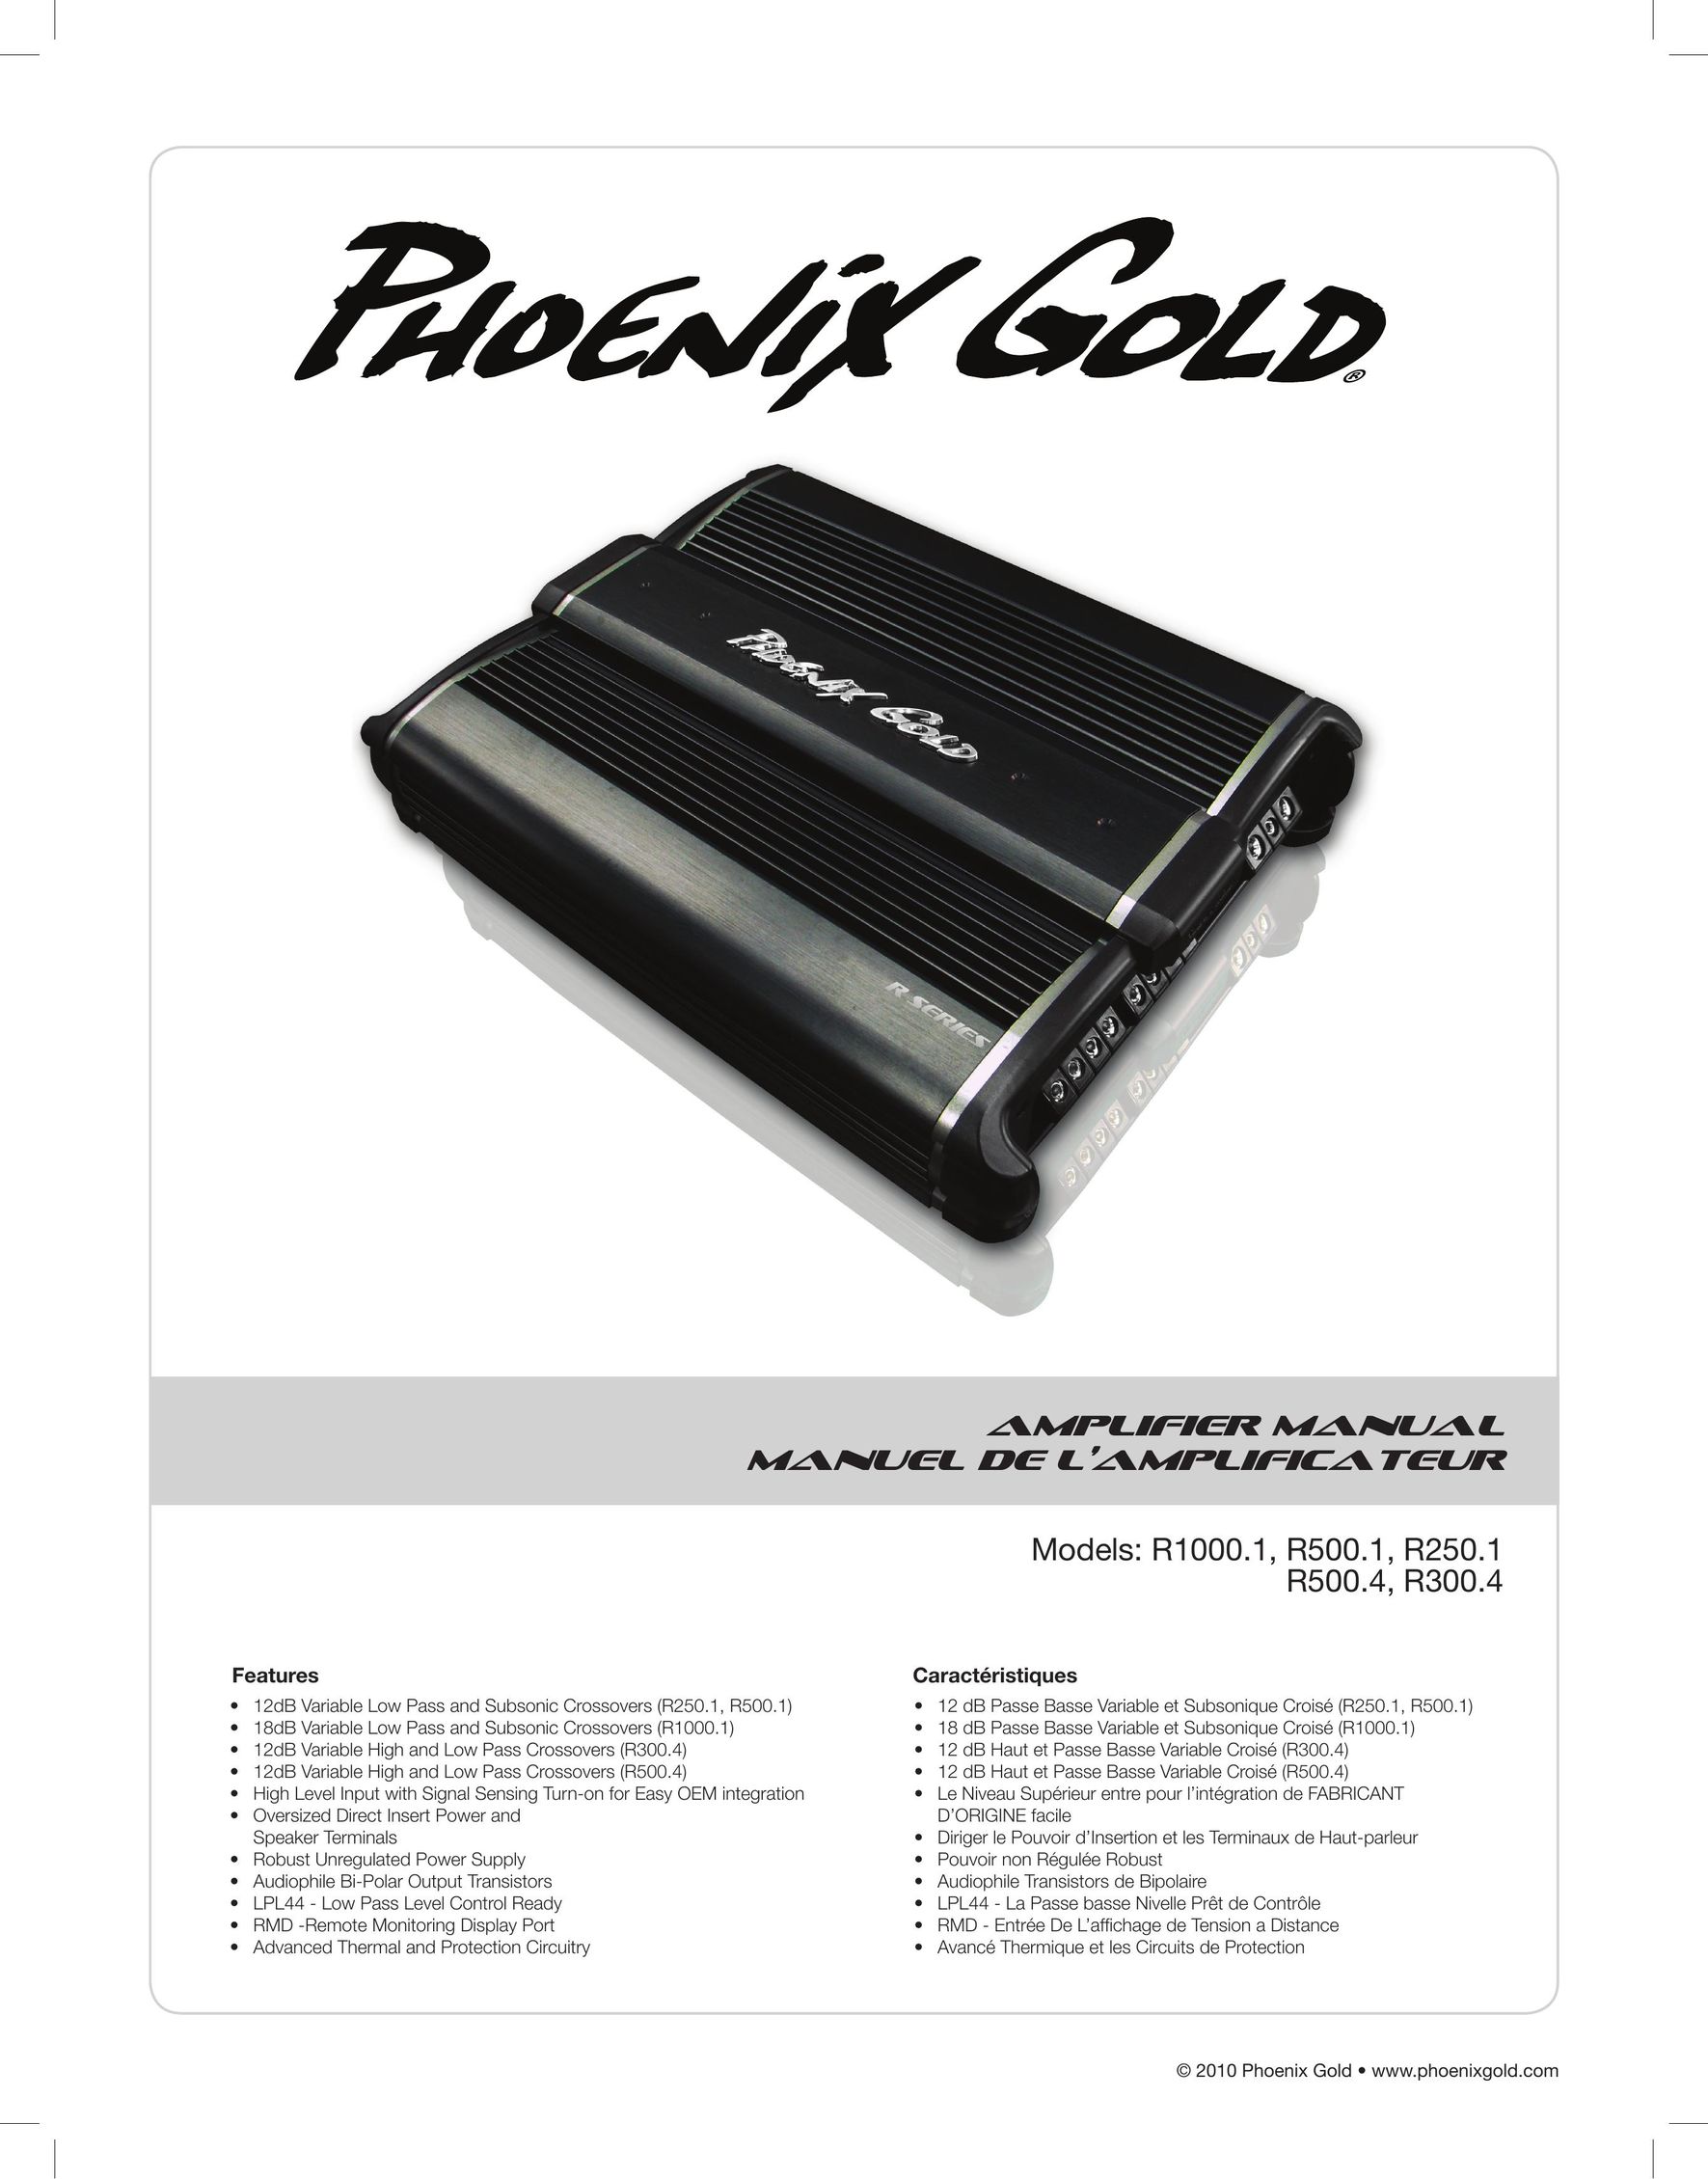 Phoenix Gold R250.1 Car Amplifier User Manual